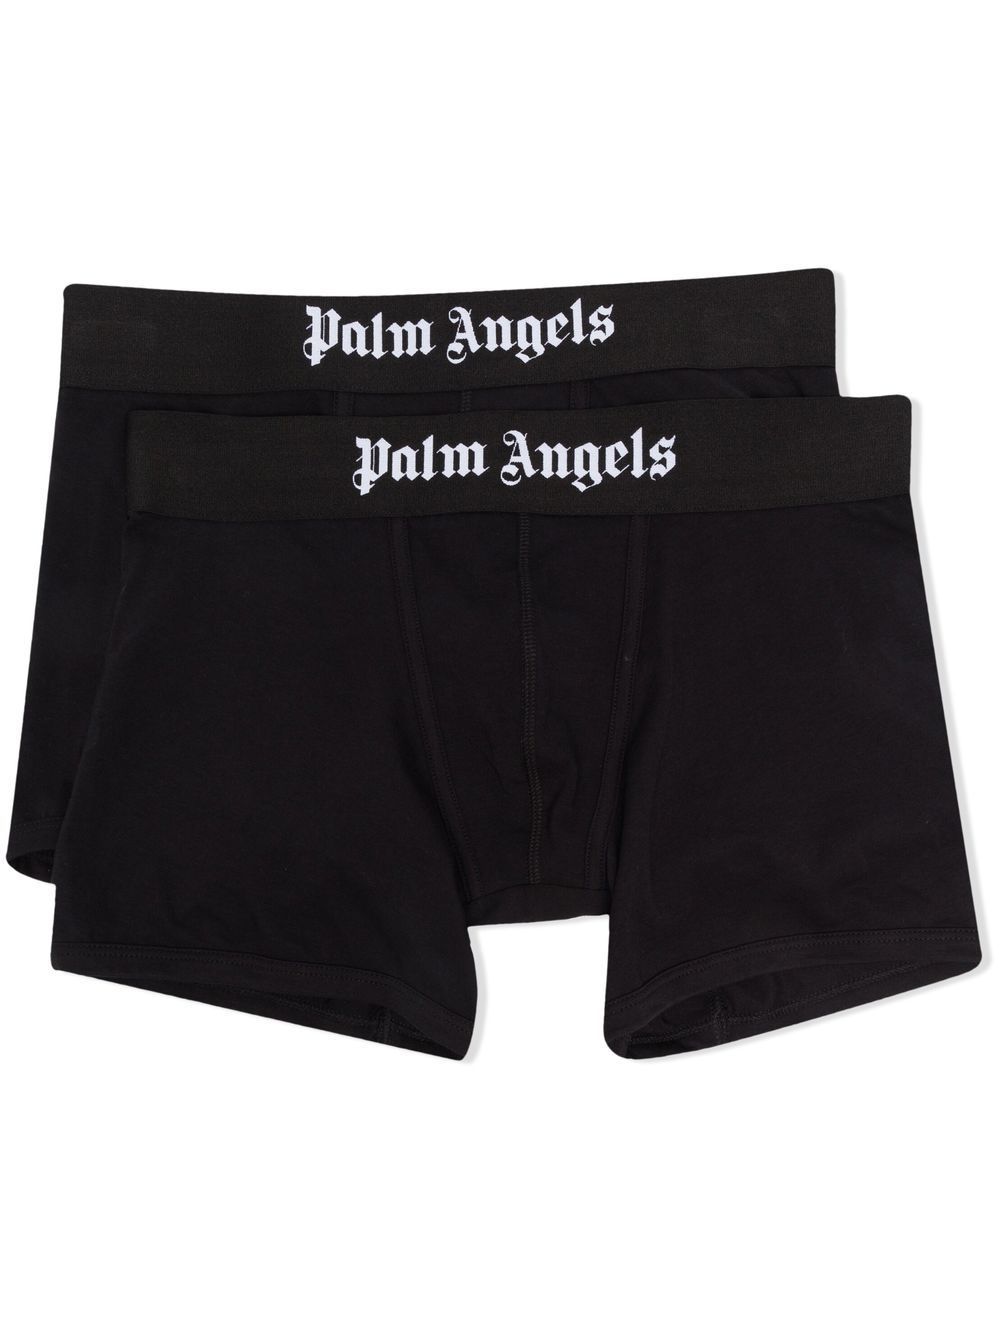 Palm Angels Logo Waistband Boxers - Farfetch